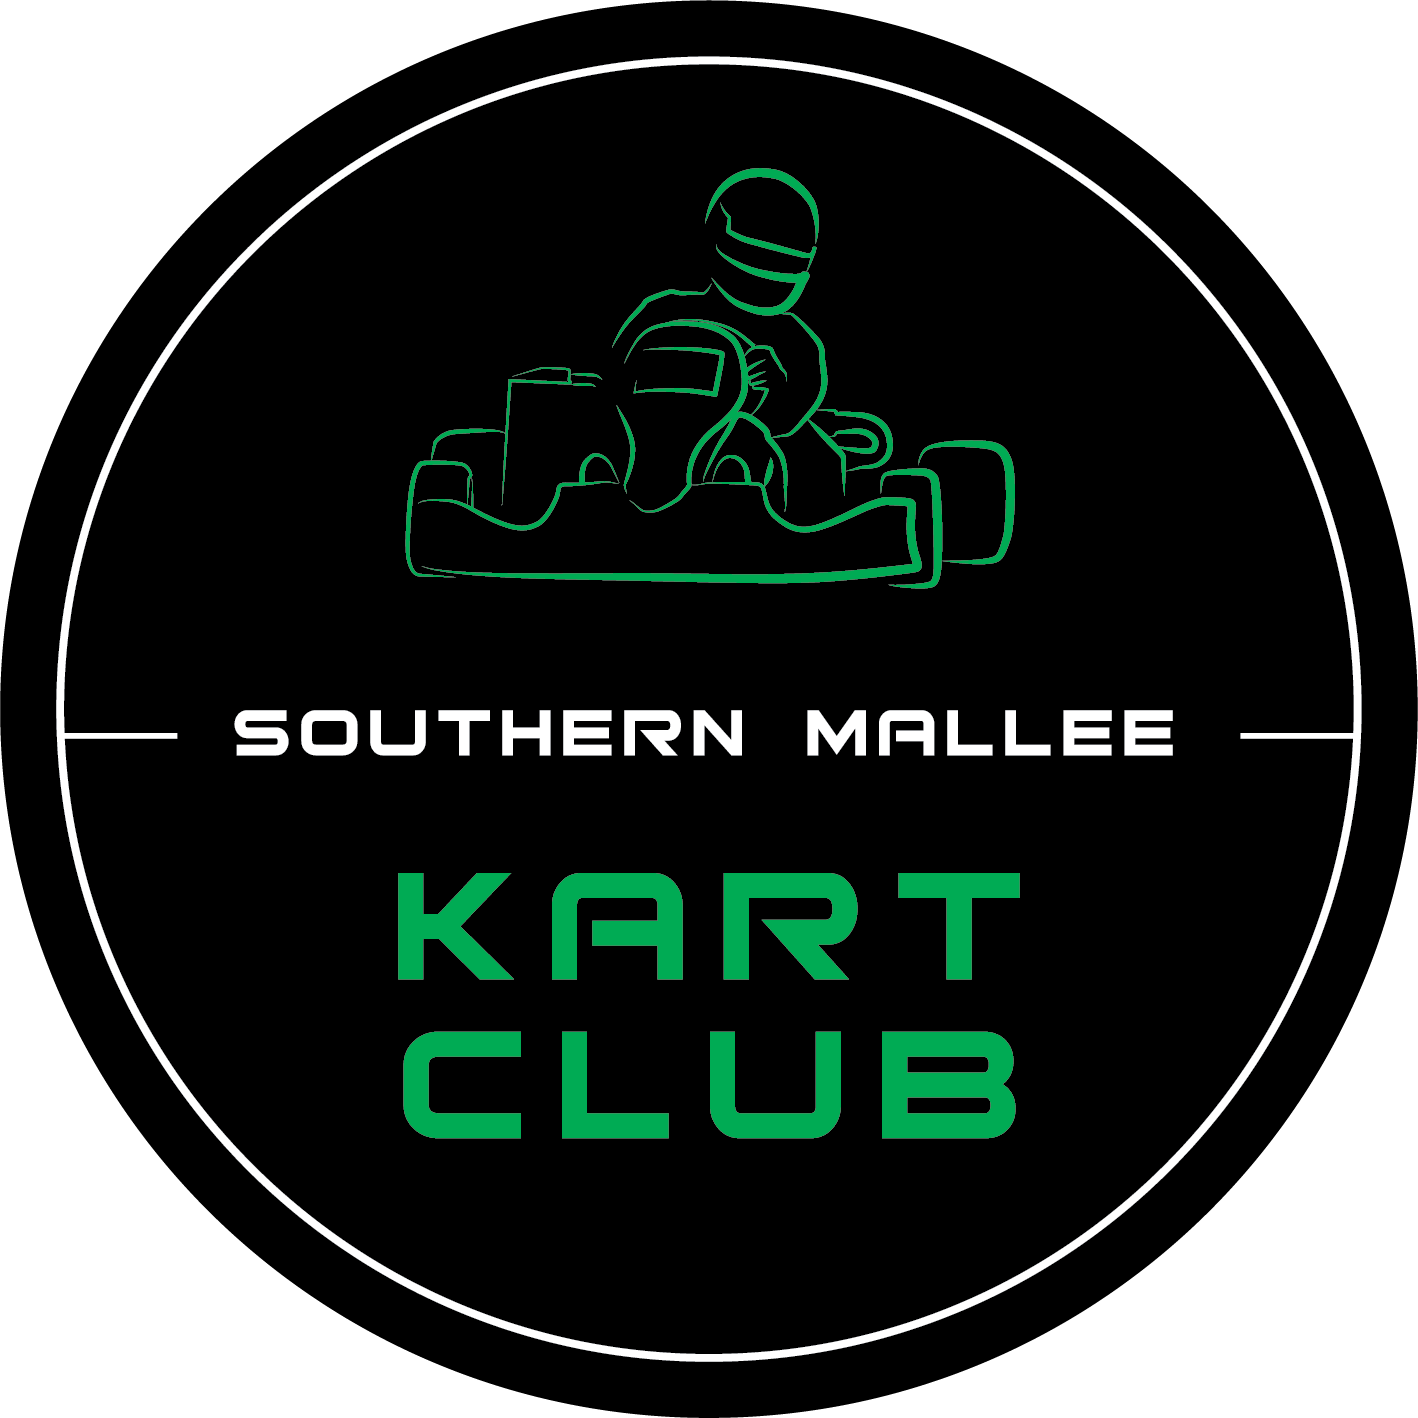 Southern Mallee Kart Club